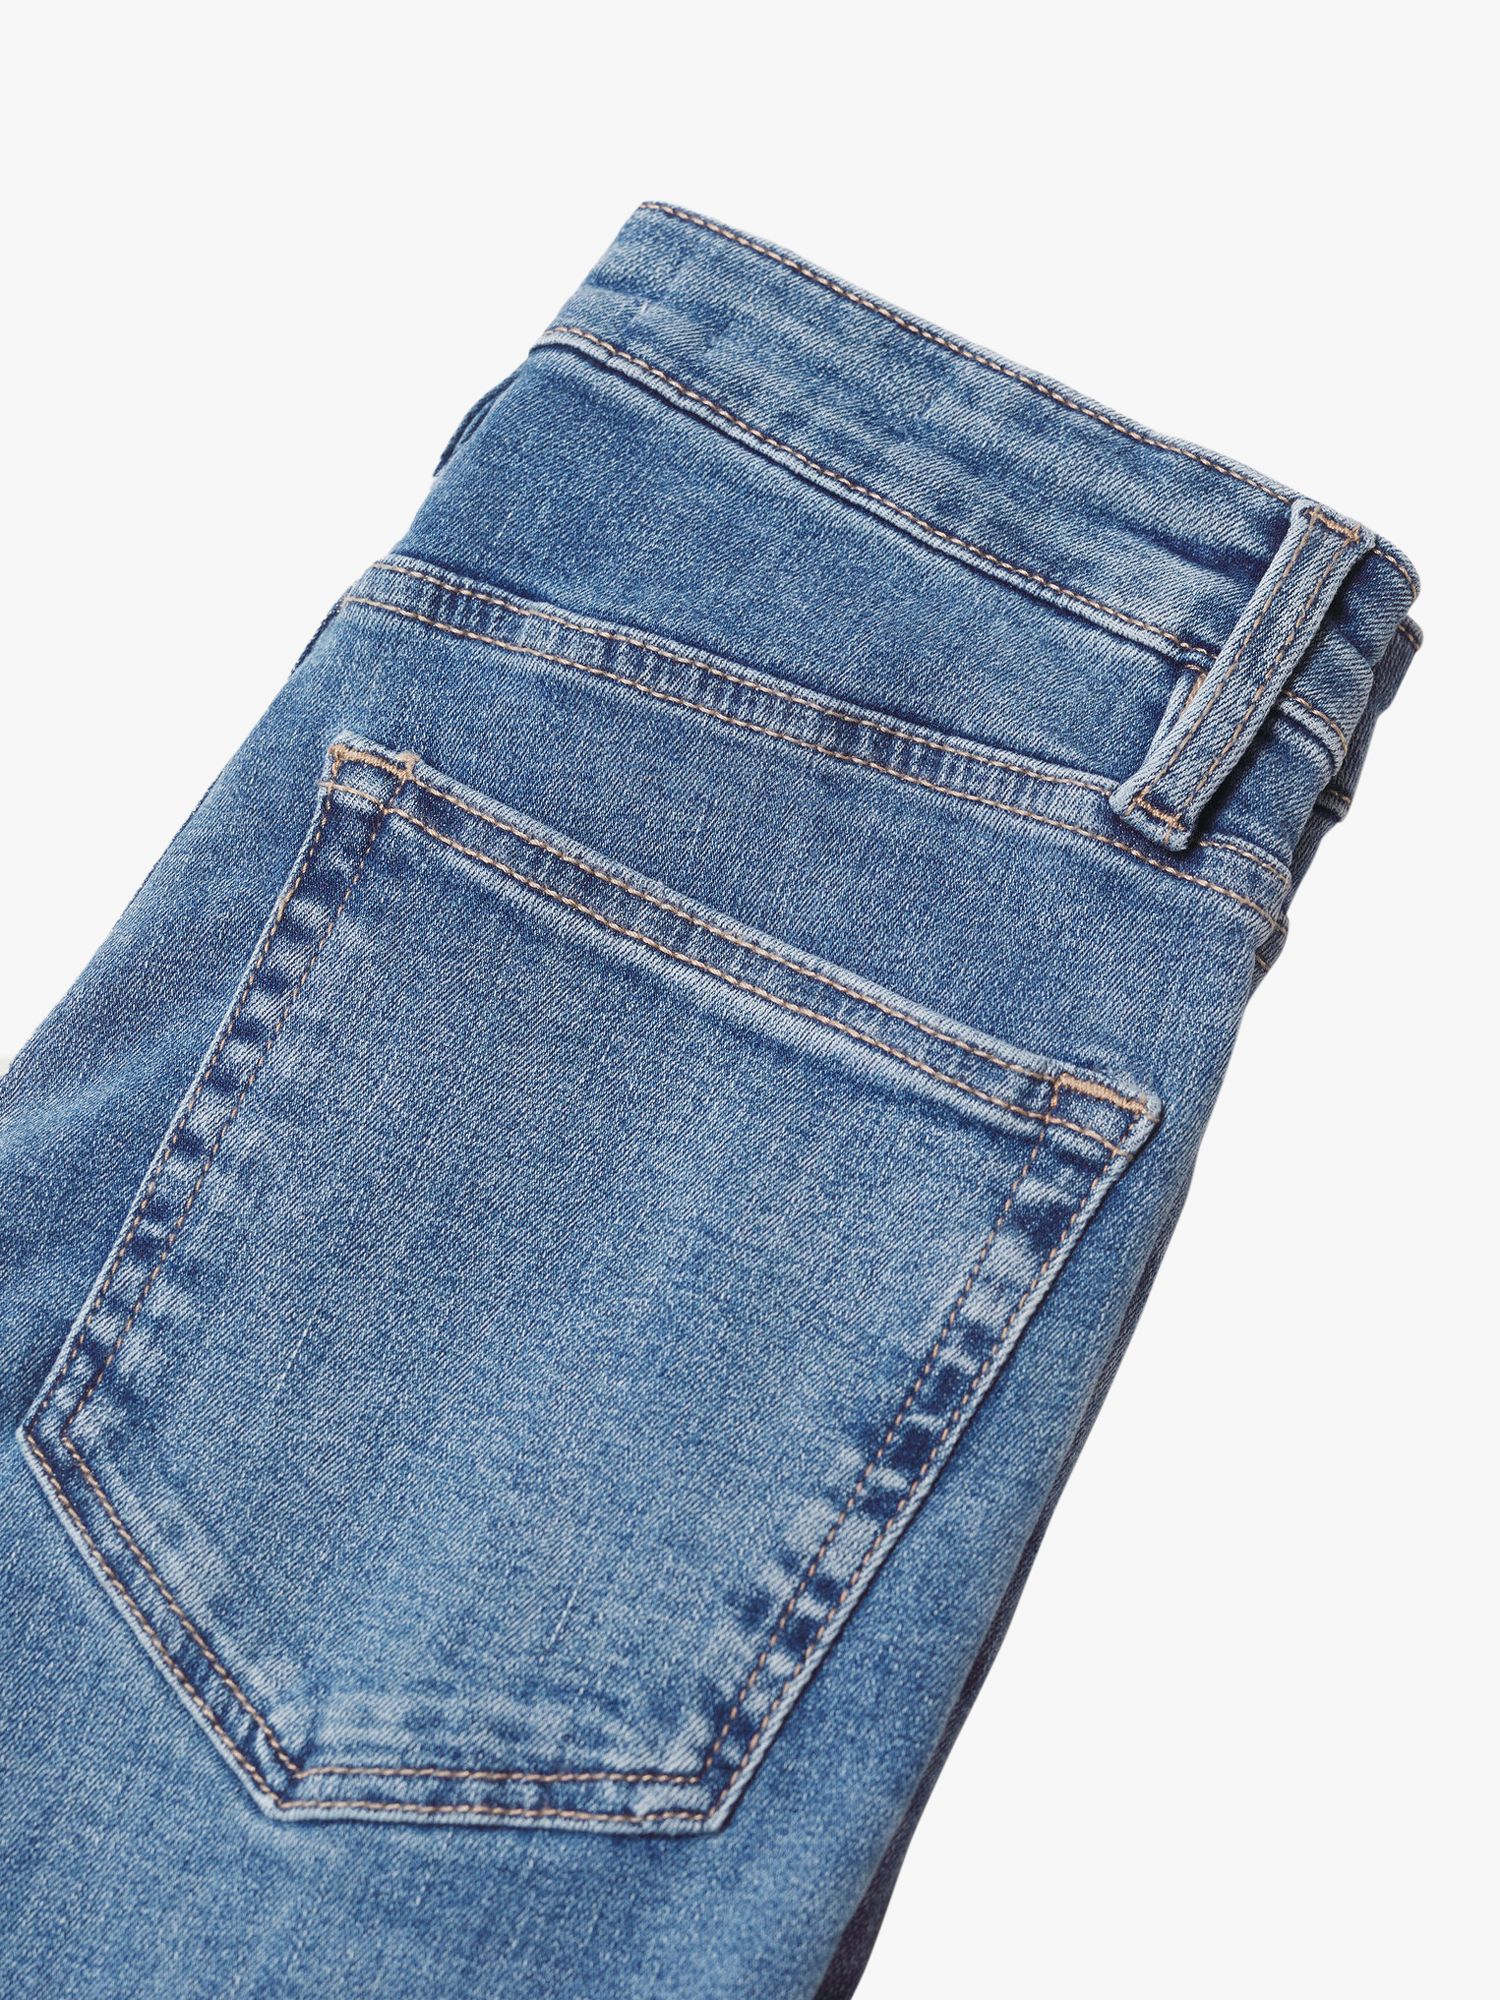 Mango Anne High Waist Skinny Jeans, Open Blue at John Lewis & Partners